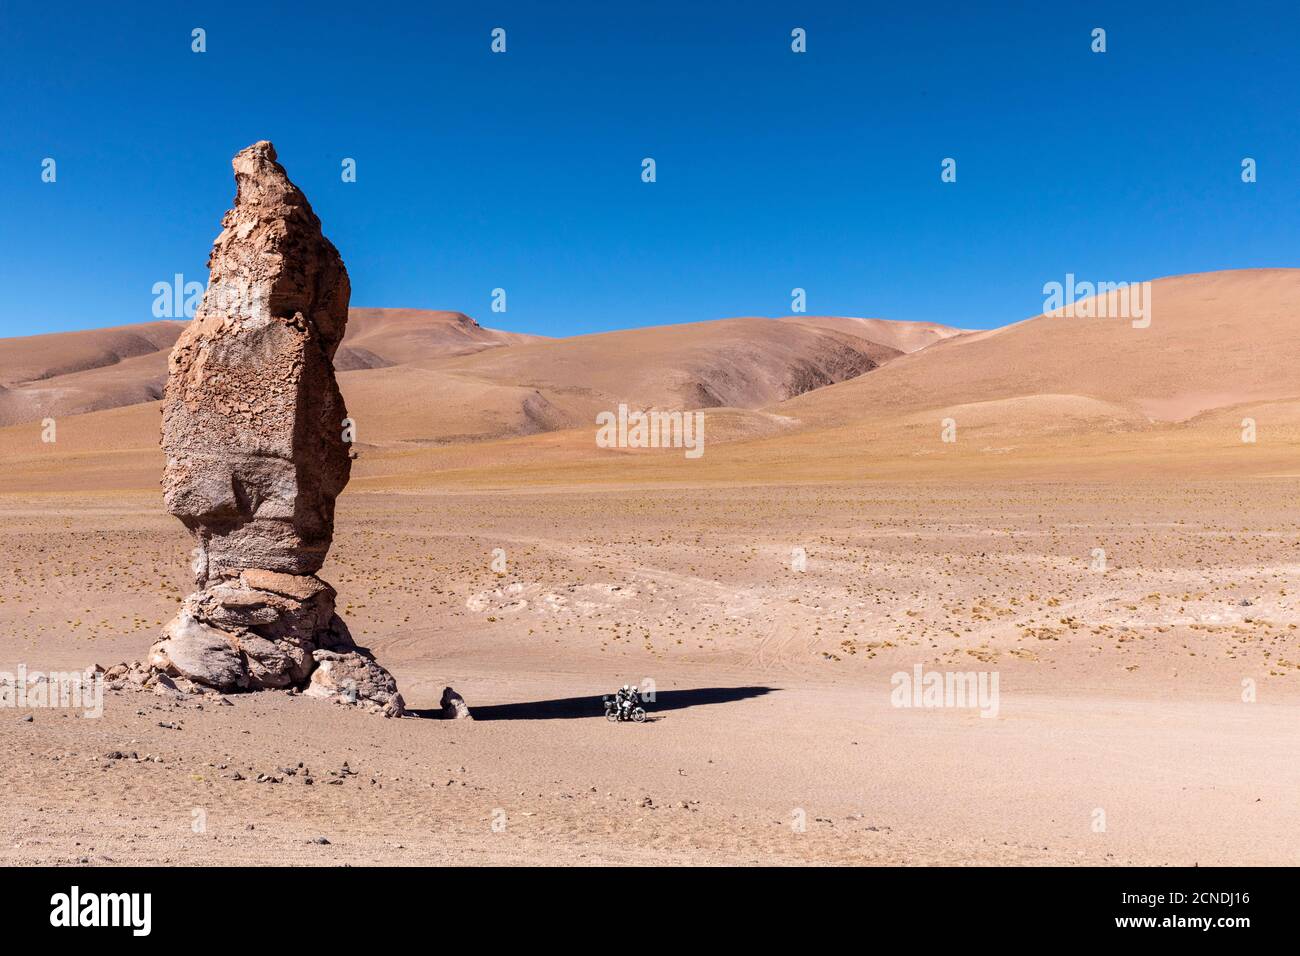 Steinformation im Salar de Tara y Aguas Calientes I, Nationalpark Los Flamencos, Region Antofagasta, Chile Stockfoto